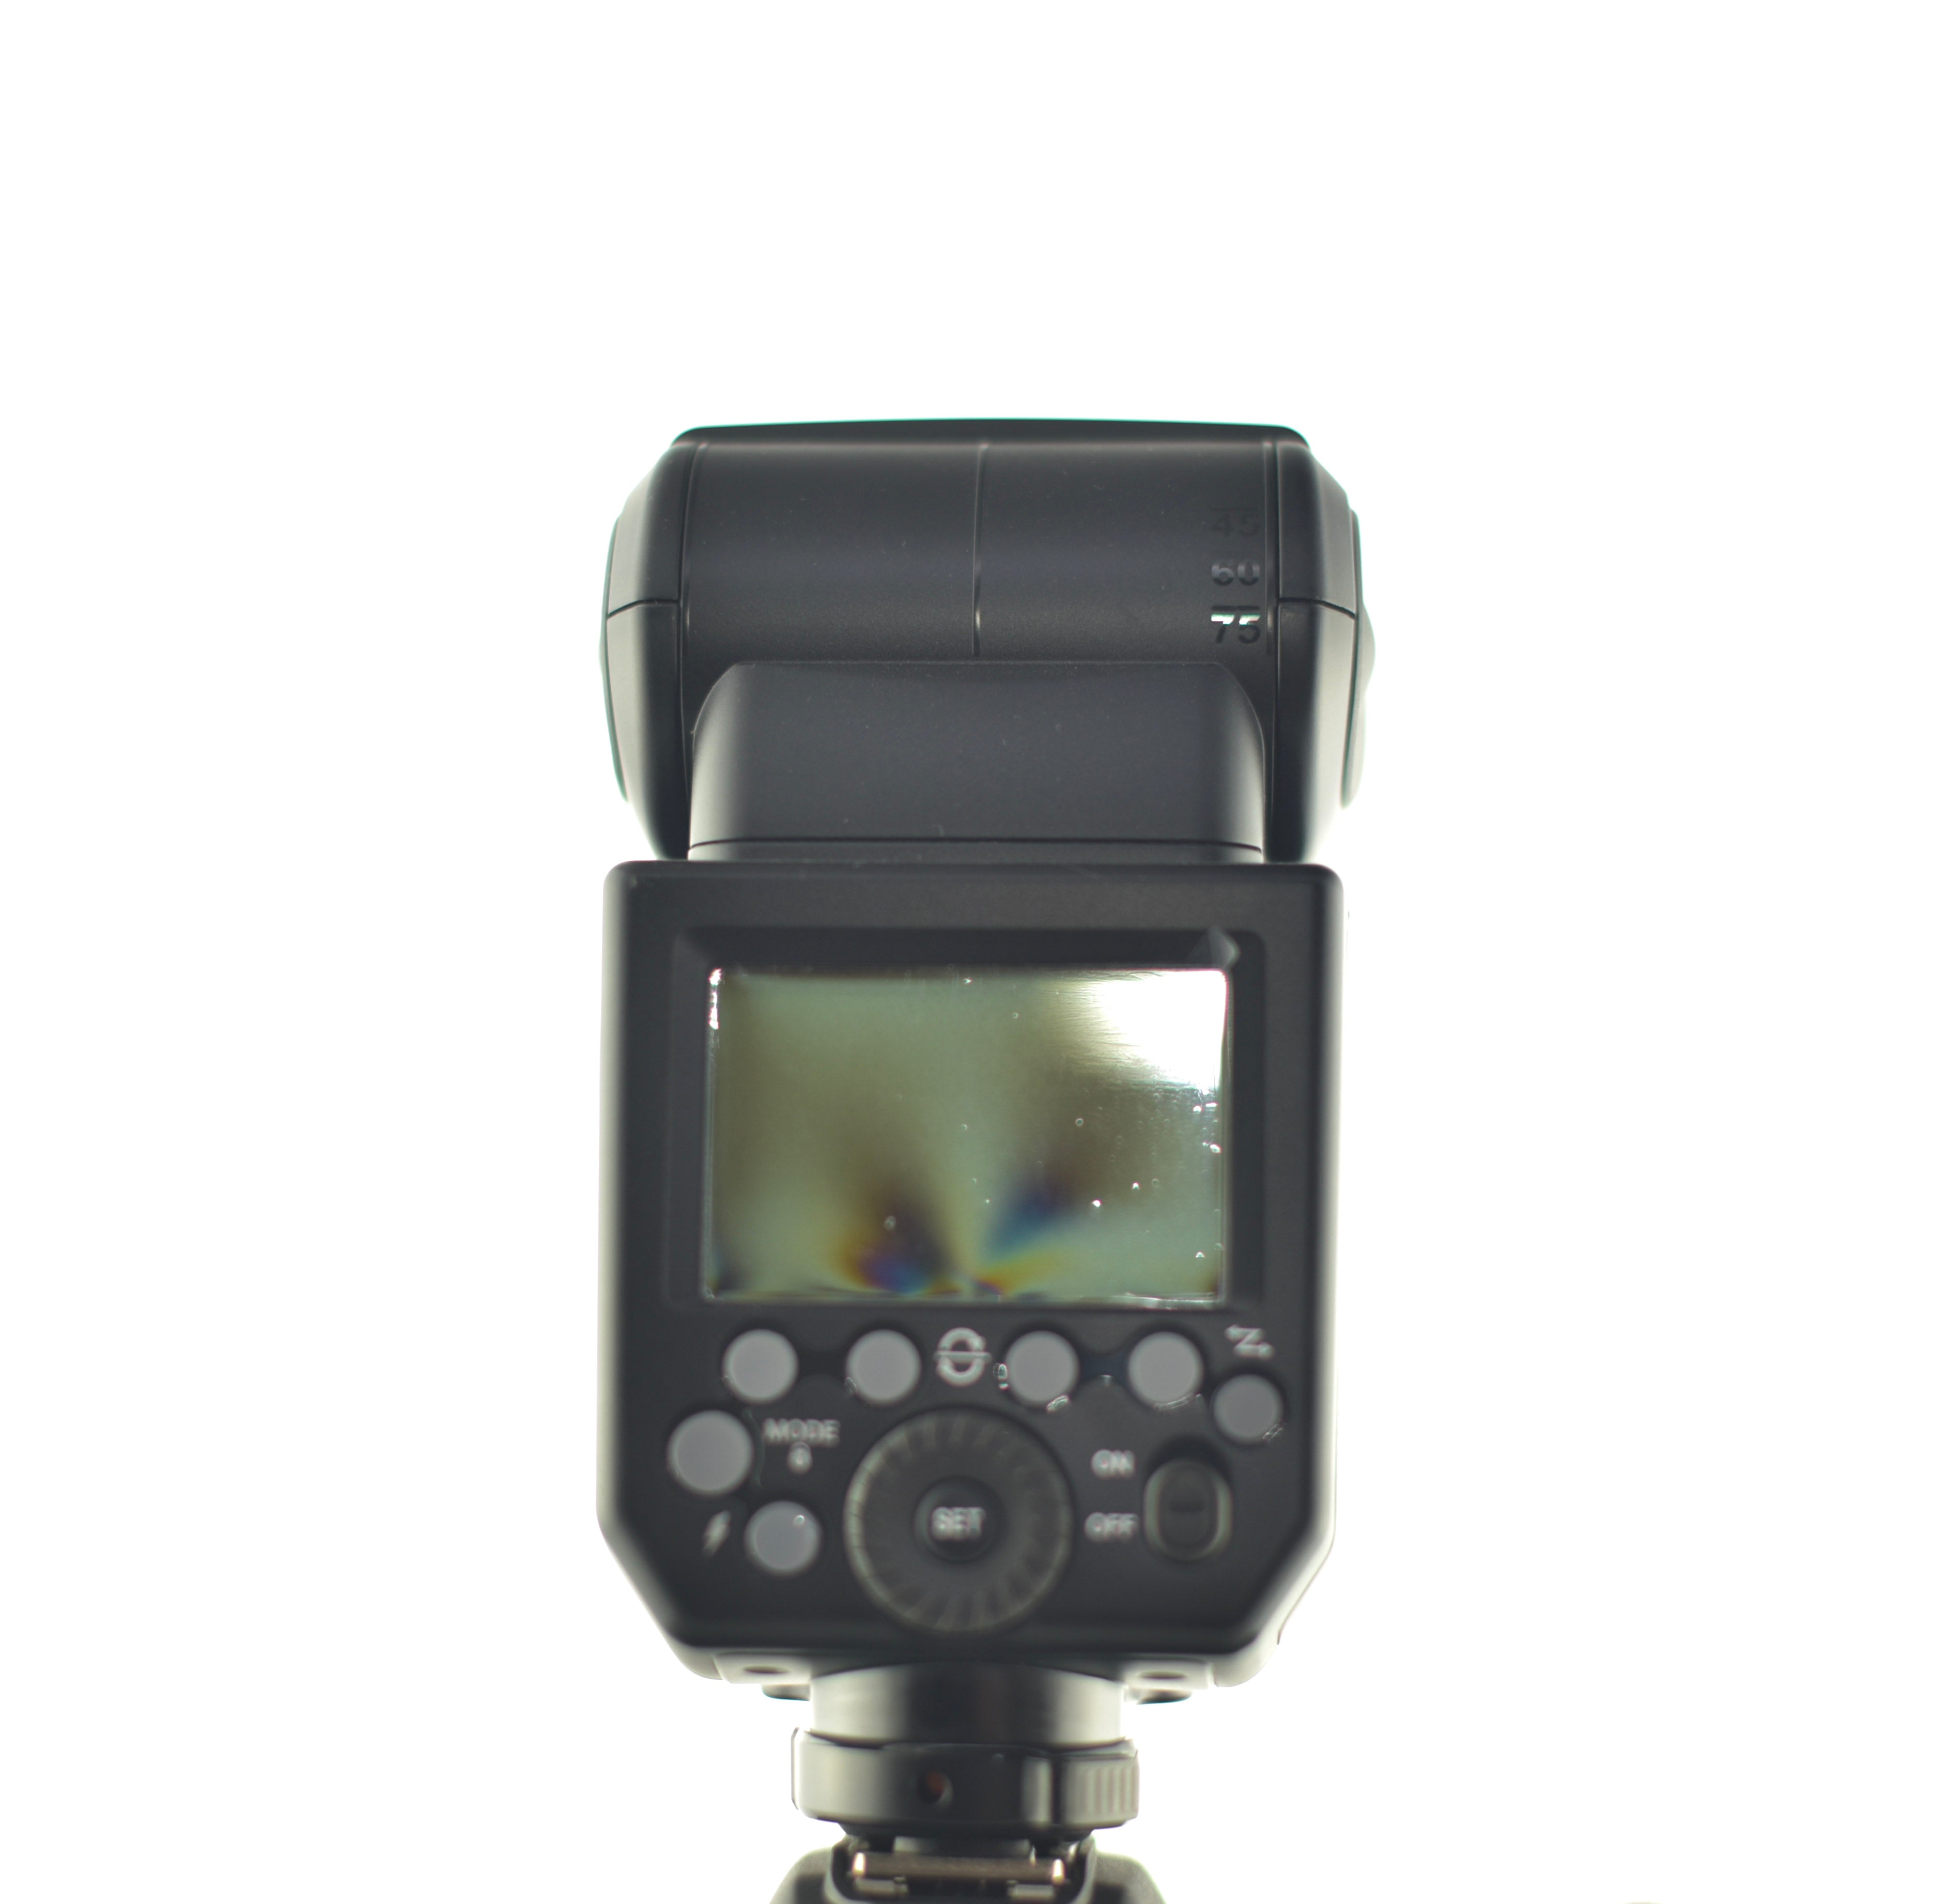 Hahnel Modus 600 RT mk ii Flashgun (Canon Compatible)